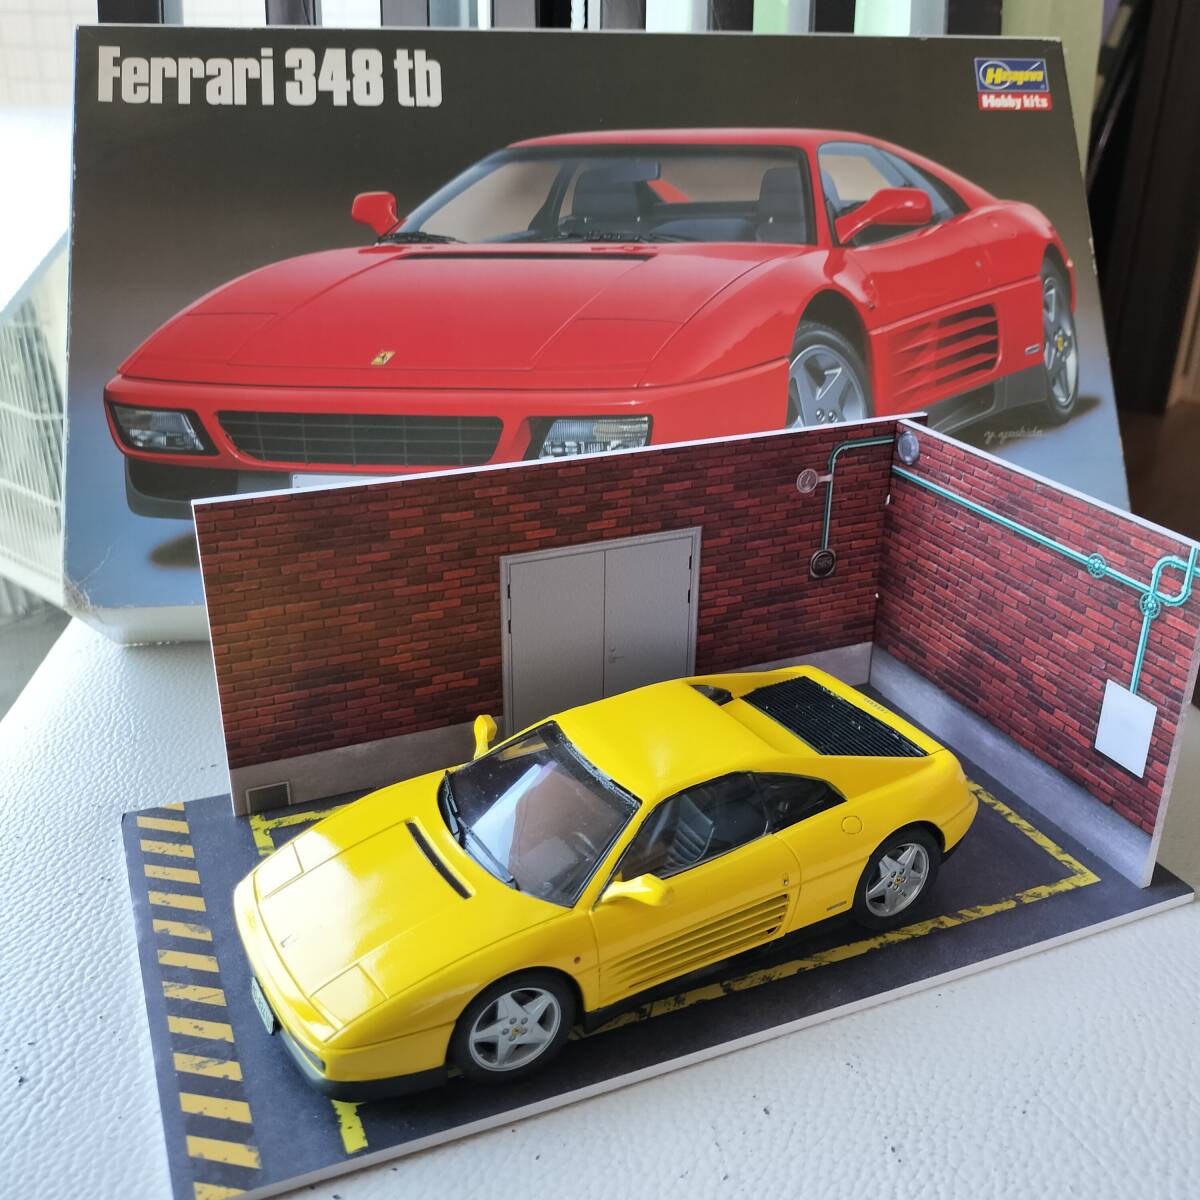  Hasegawa Ferrari 348tb 1/24 final product 